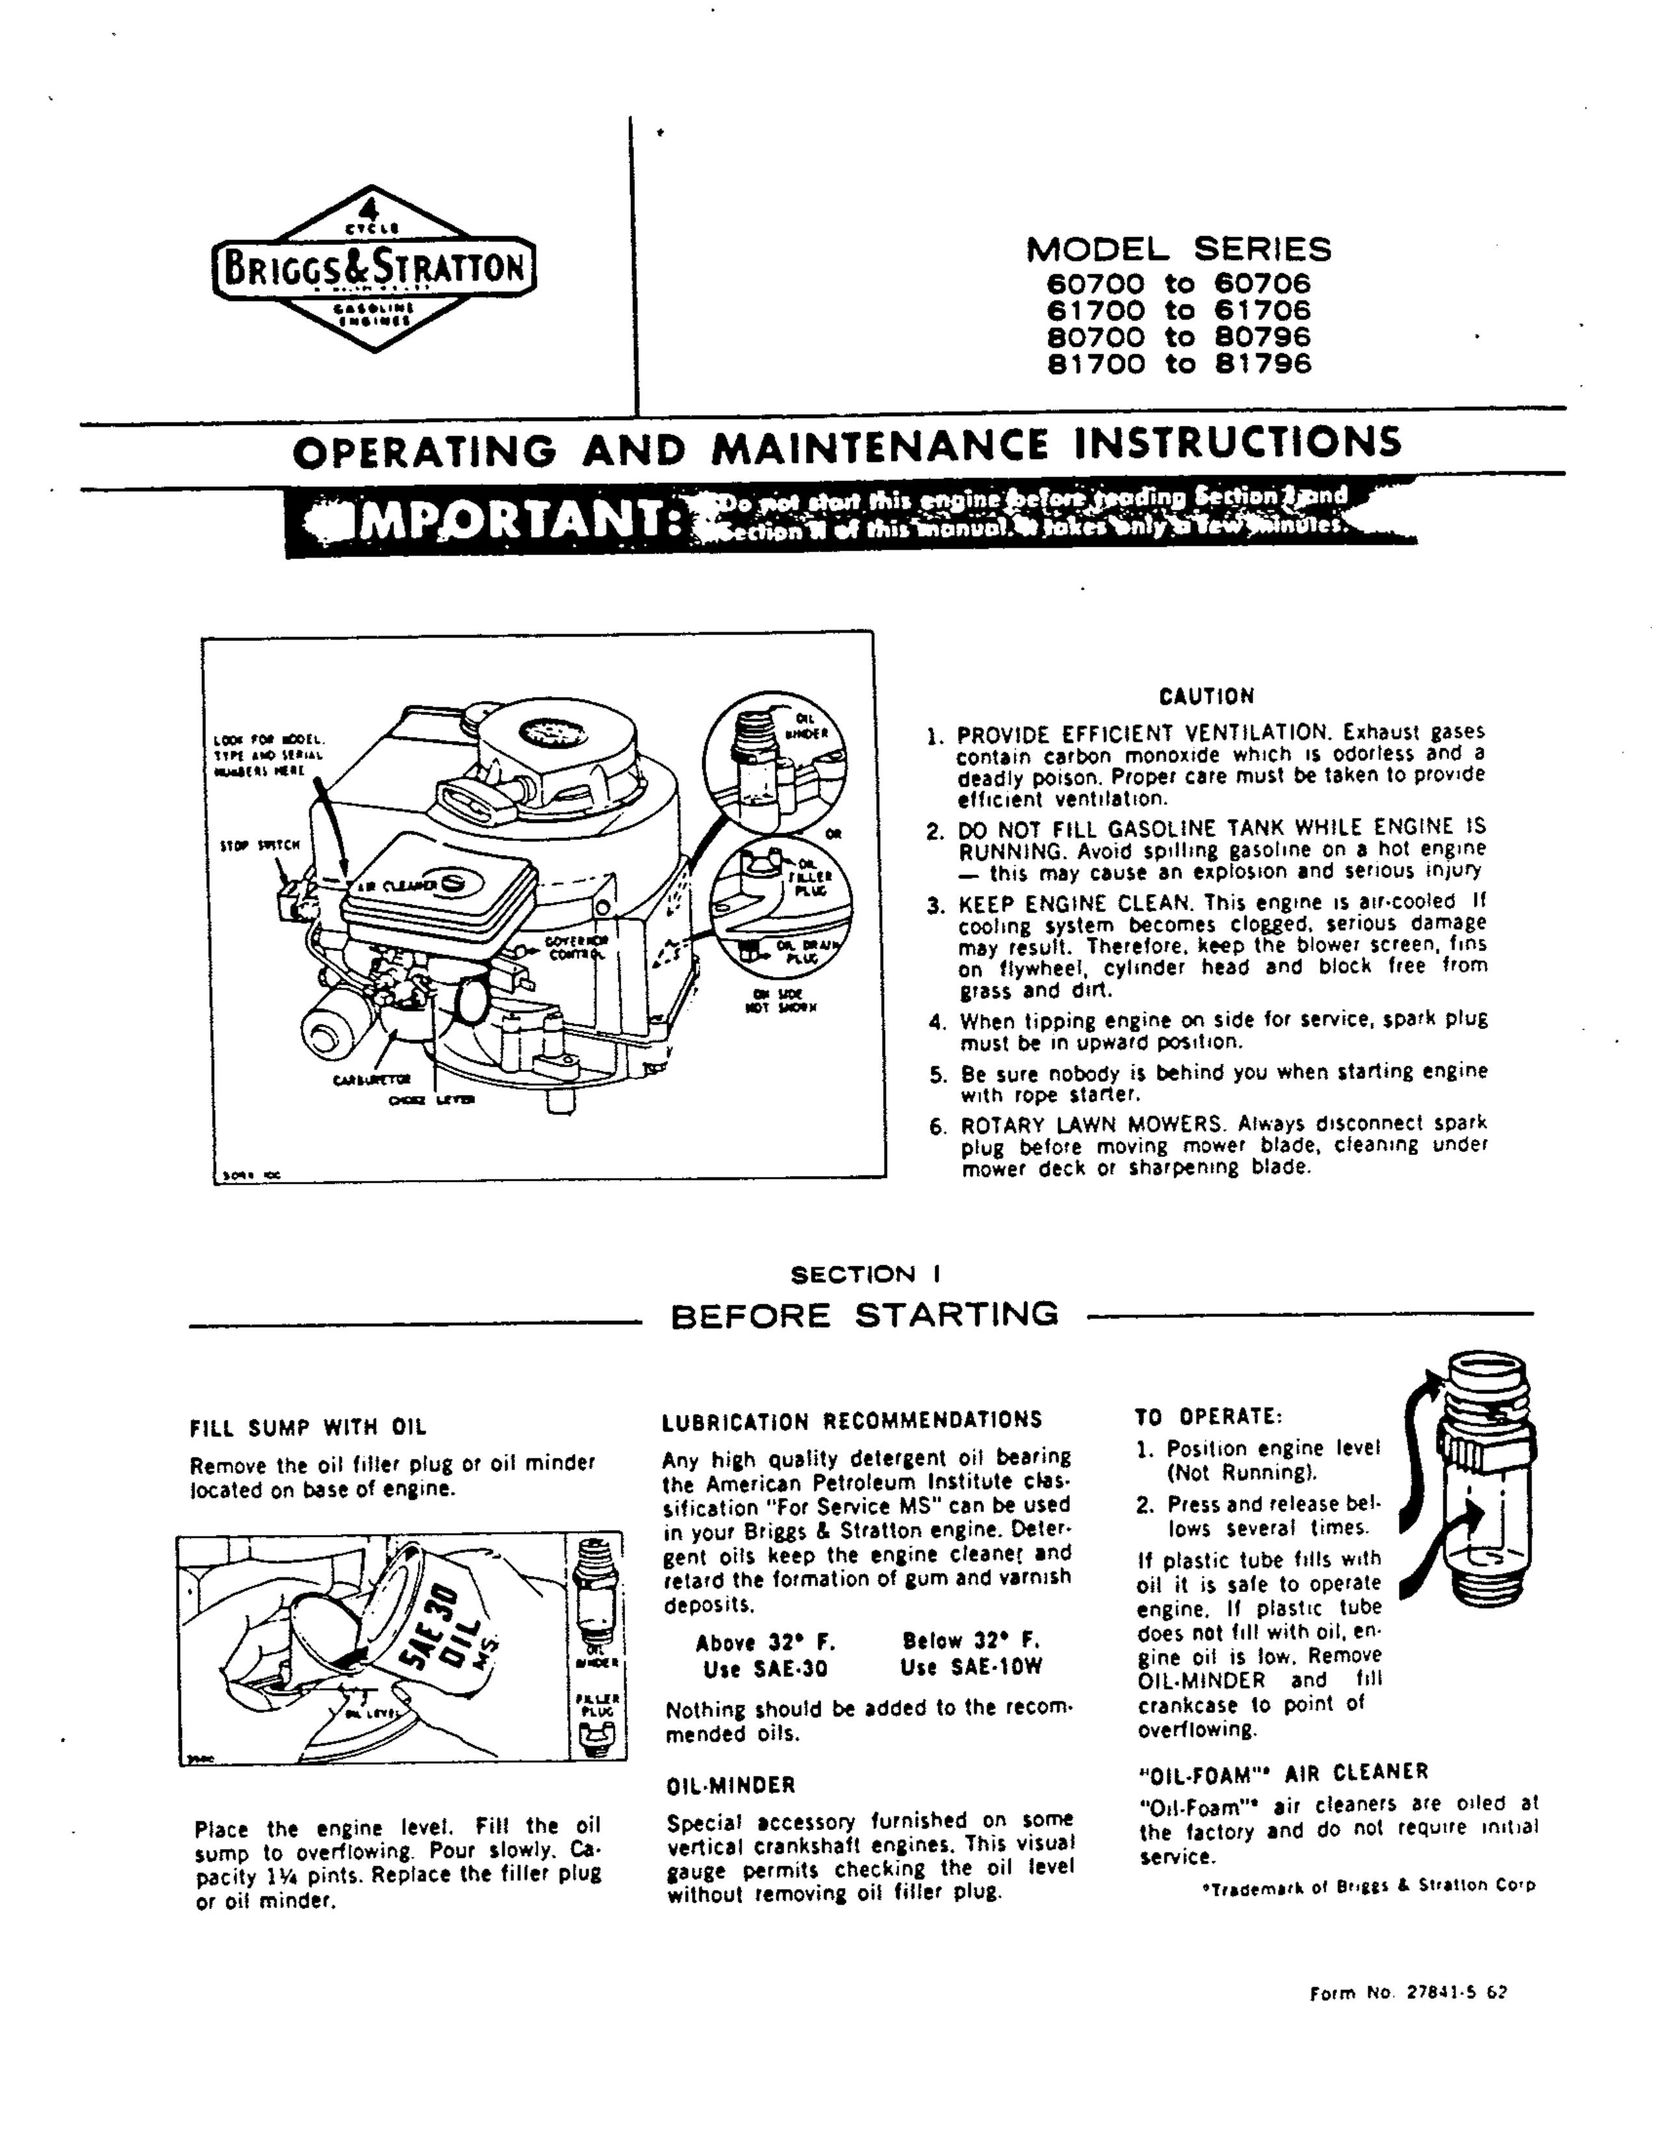 Briggs & Stratton 61700 -61706 Building Set User Manual